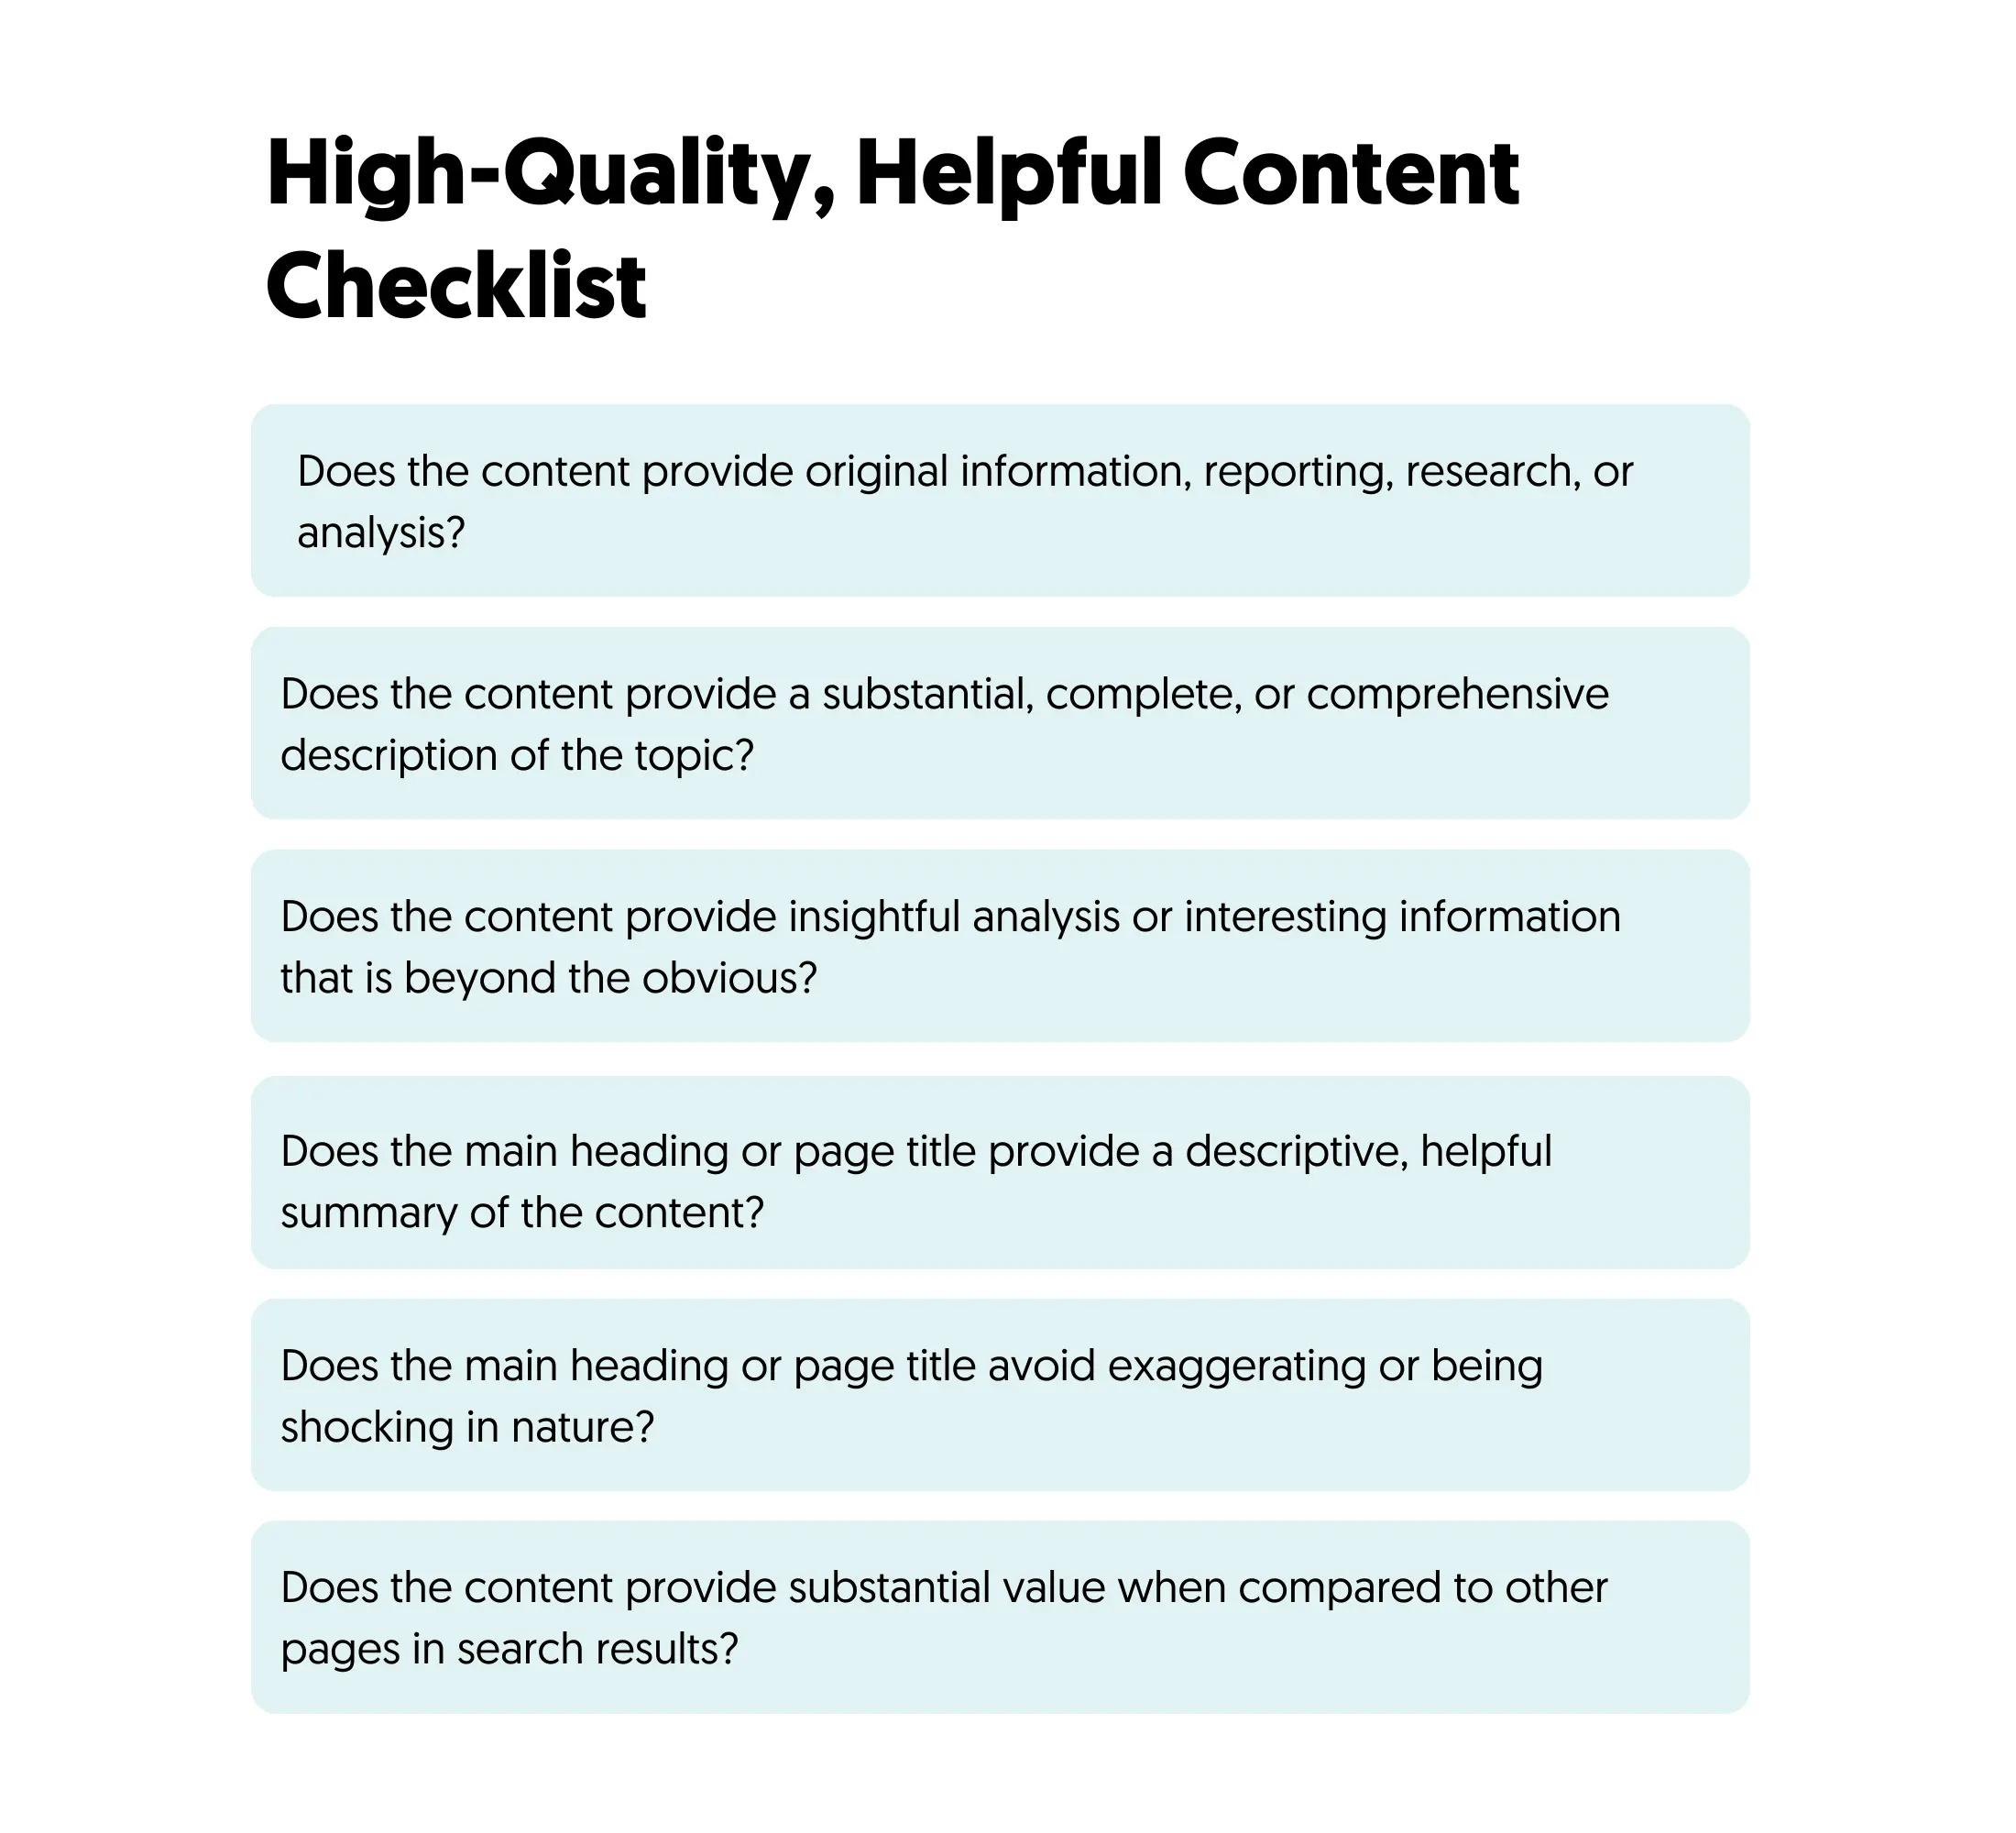 High-Quality, Helpful Content Checklist